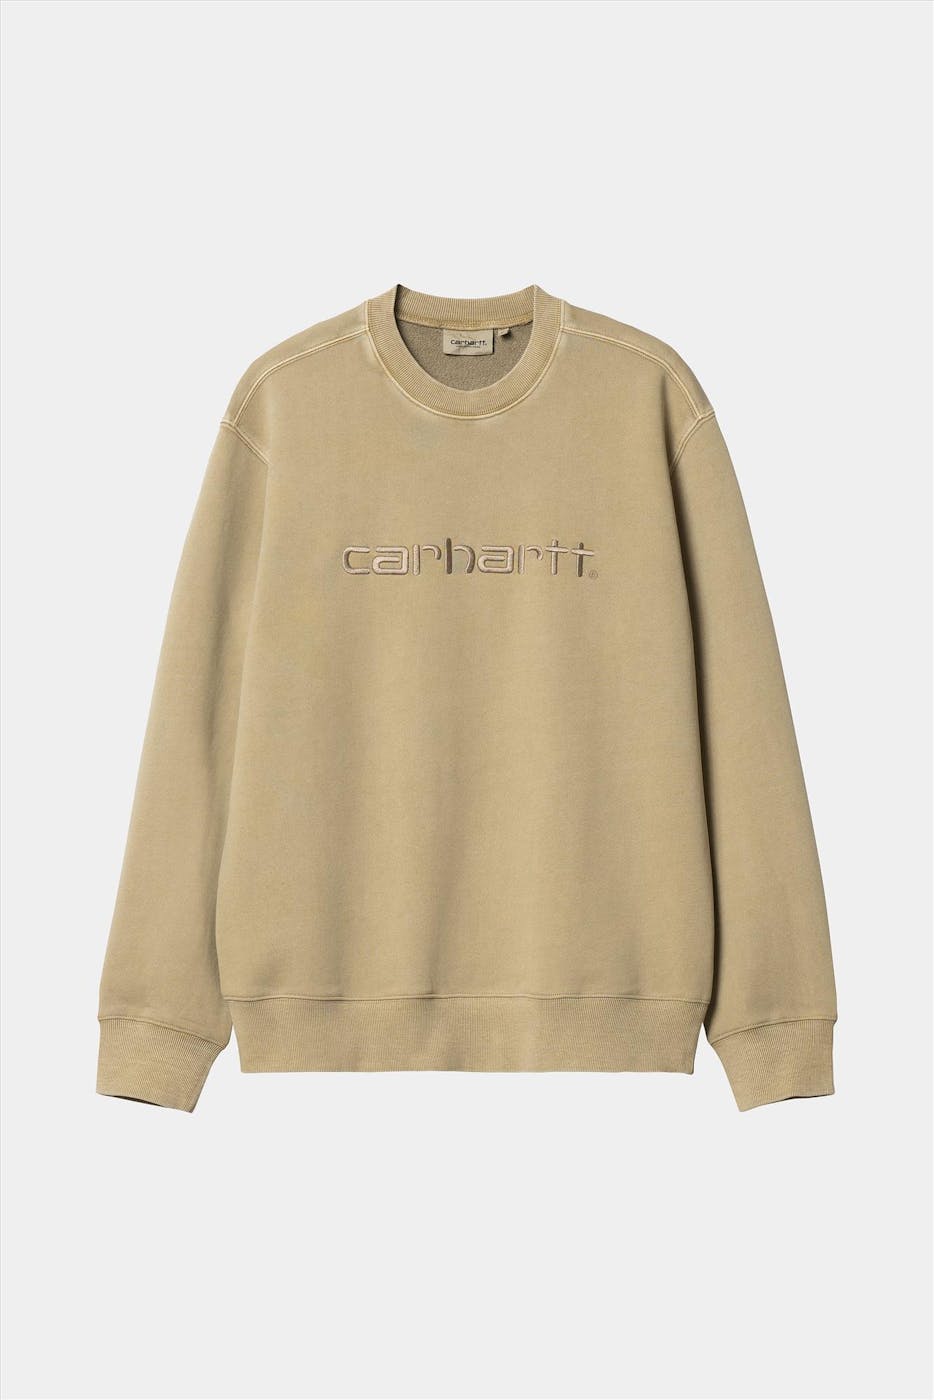 Carhartt WIP - Lichtgroene Duster sweater